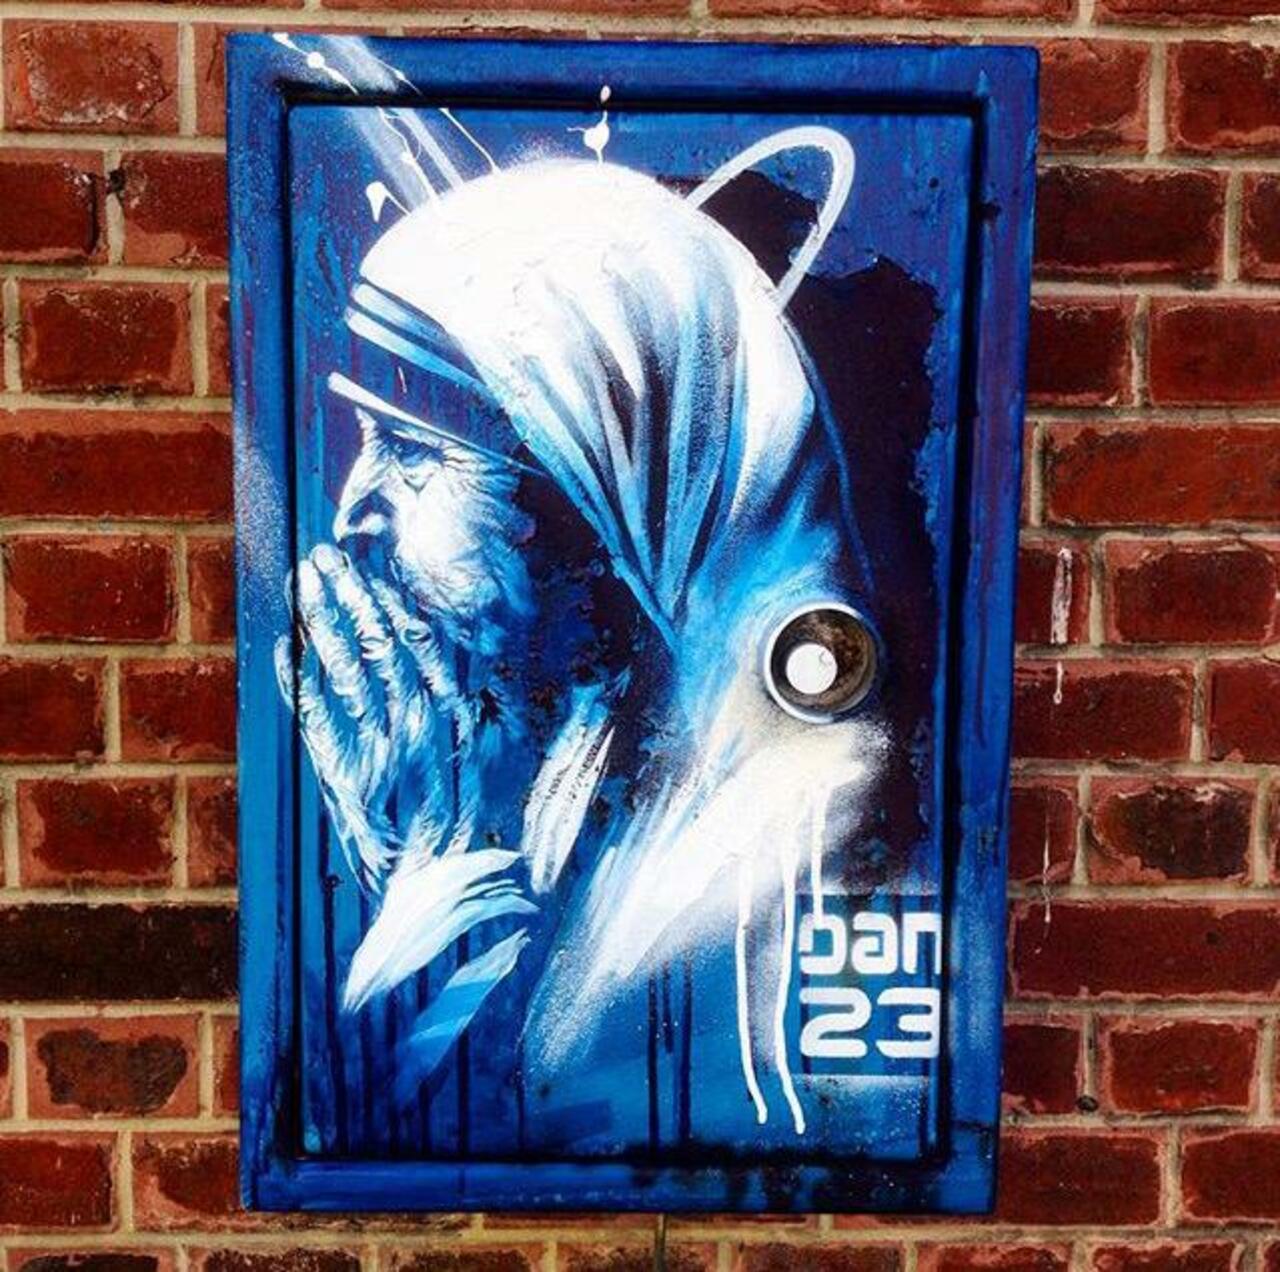 New Street Art 'Détail Spirit' by Dan23 #art #graffiti #mural #streetart http://t.co/PtrgxEwYME … … http://twitter.com/charlesjackso14/status/649568928239382528